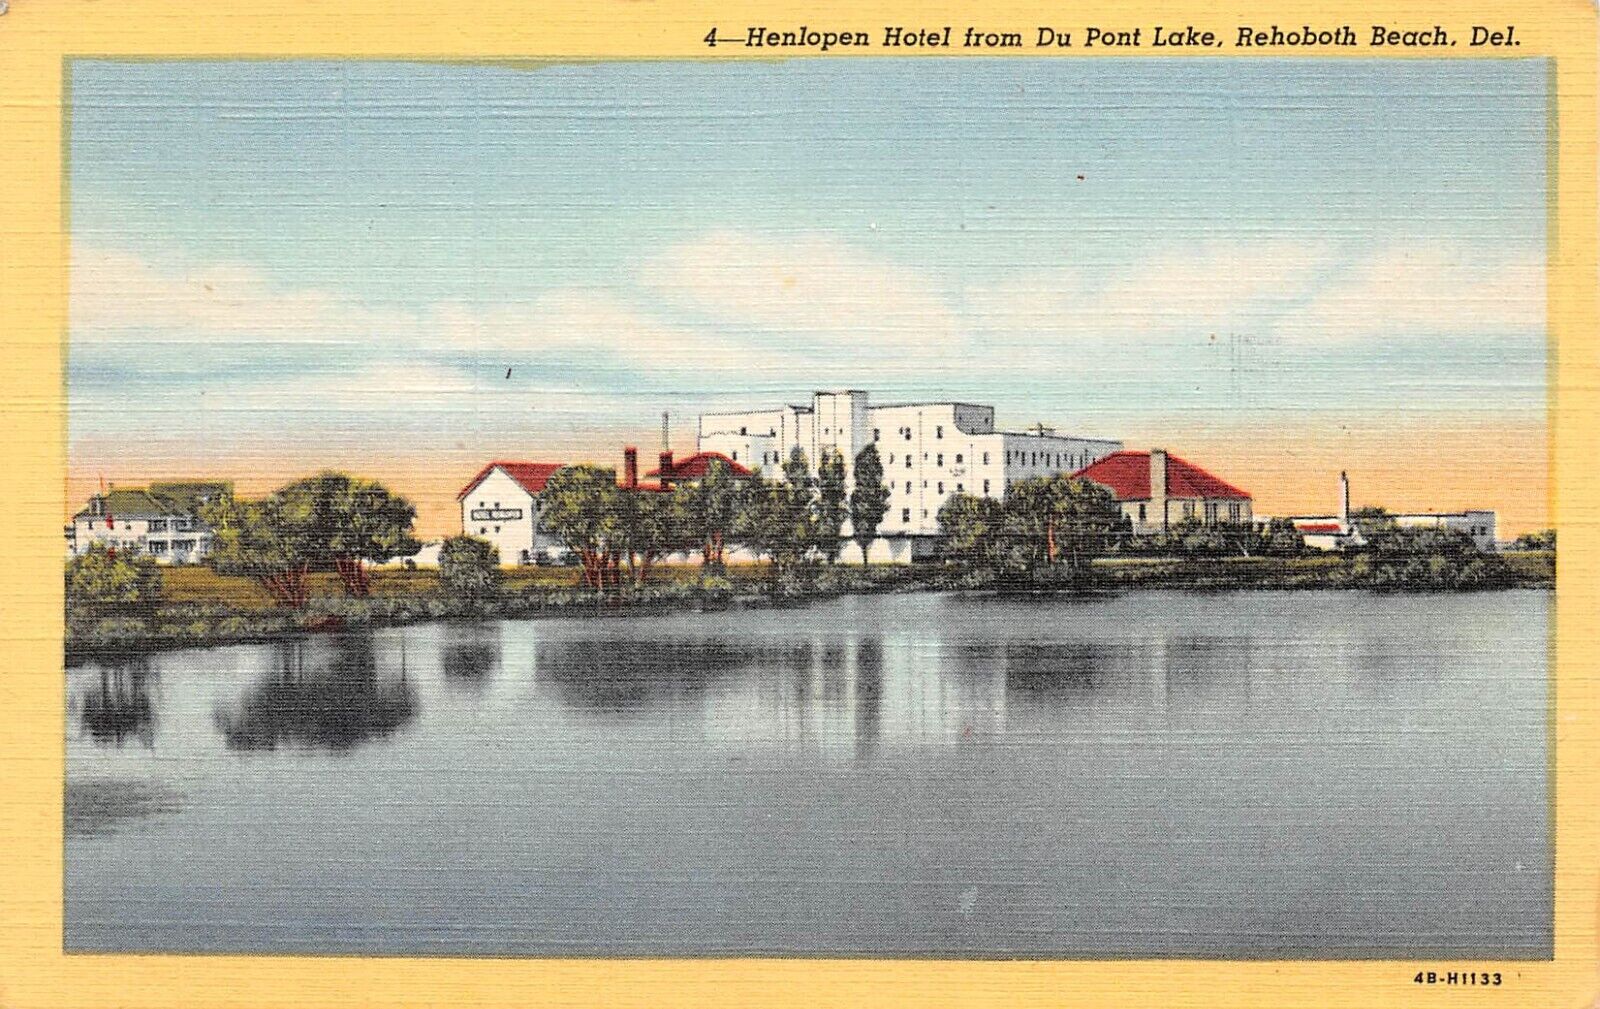 Henlopen Hotel from DuPont Lake Rehoboth Beach 1948 Delaware Postcard